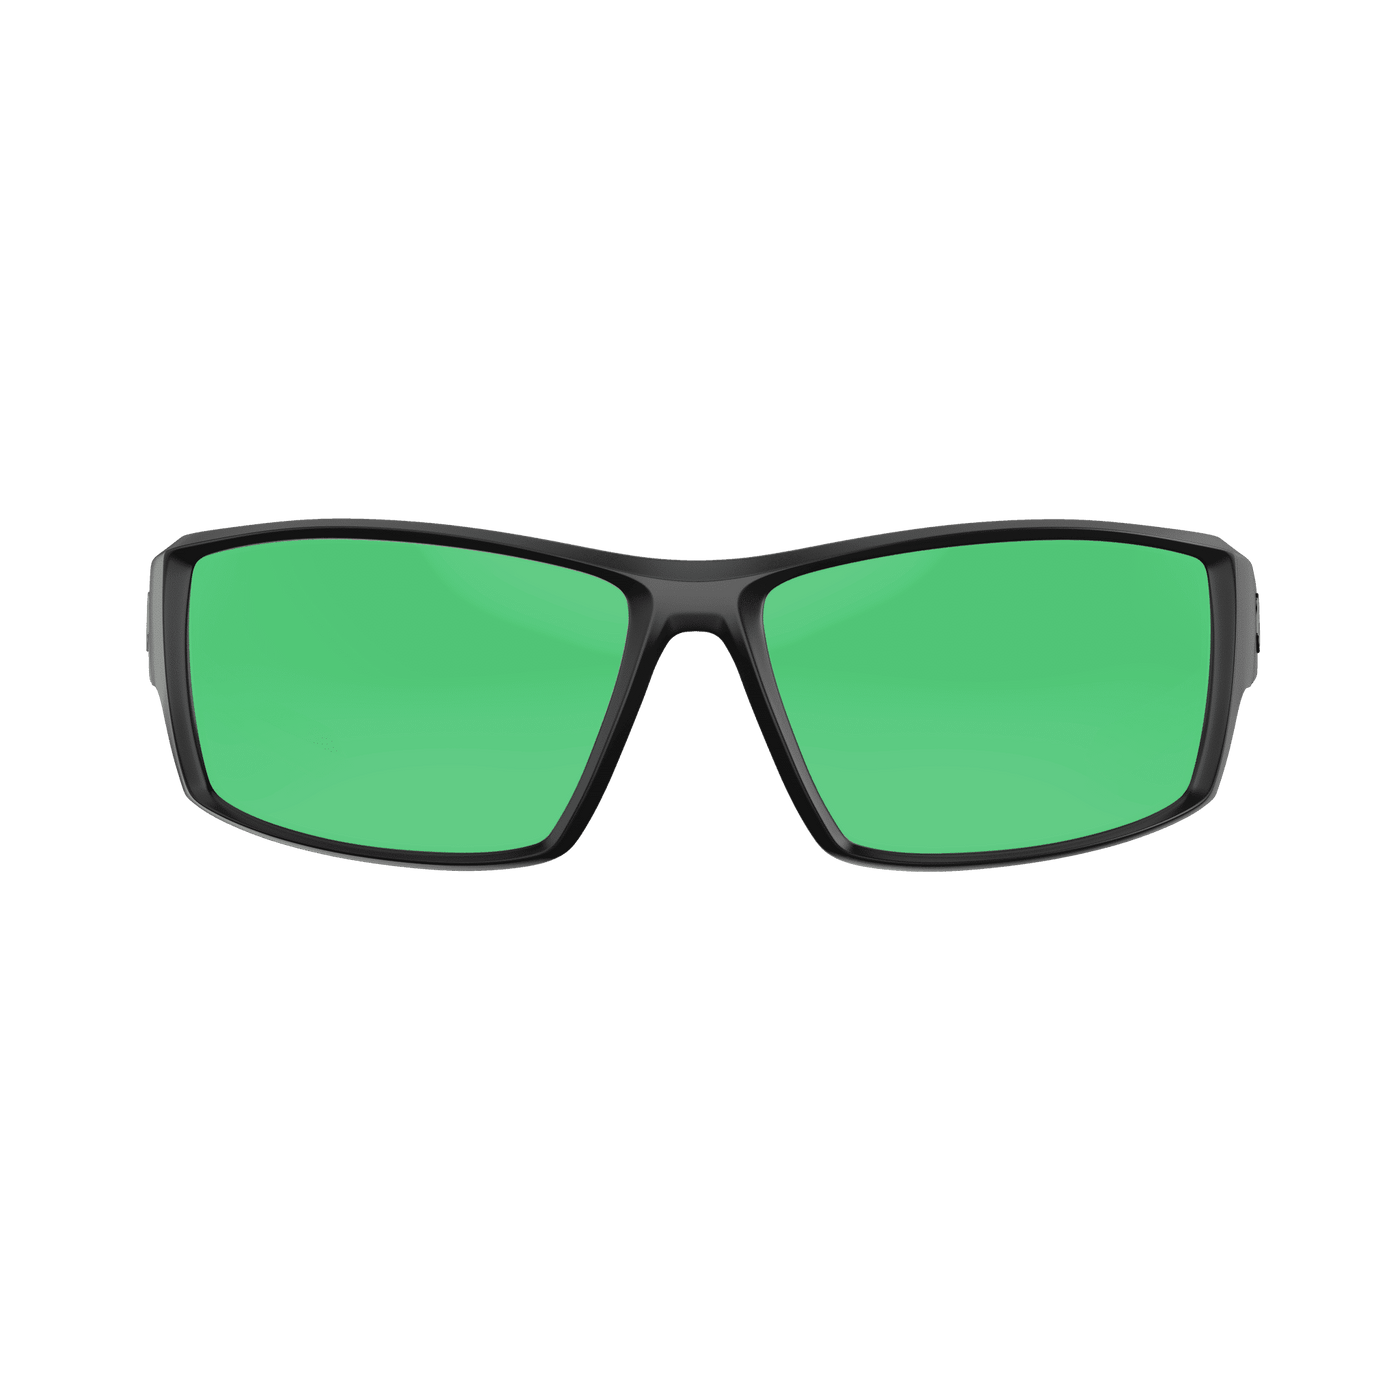 Redtail Republic Sunglasses Accessories Redtail Republic Baffin Matte Black Green Mirror